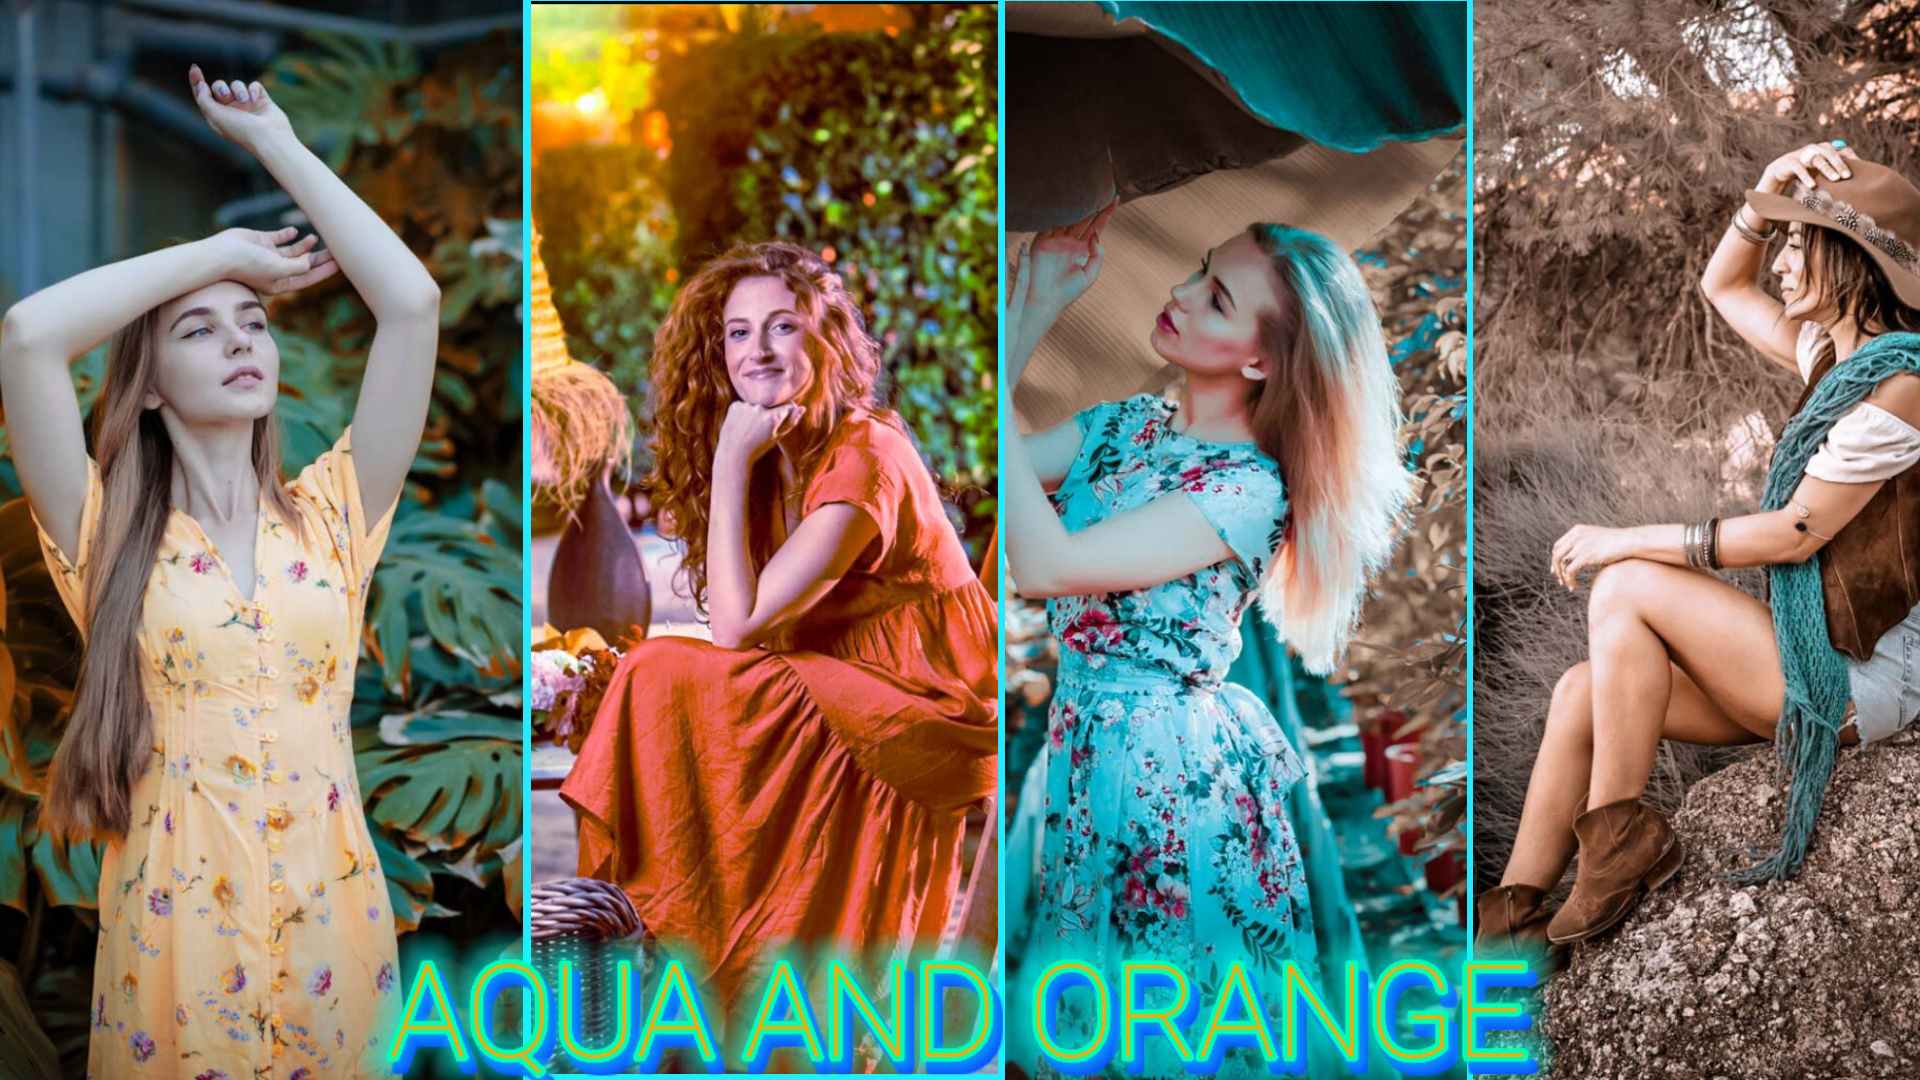 Top 4 Aqua and Orange Lightroom preset download